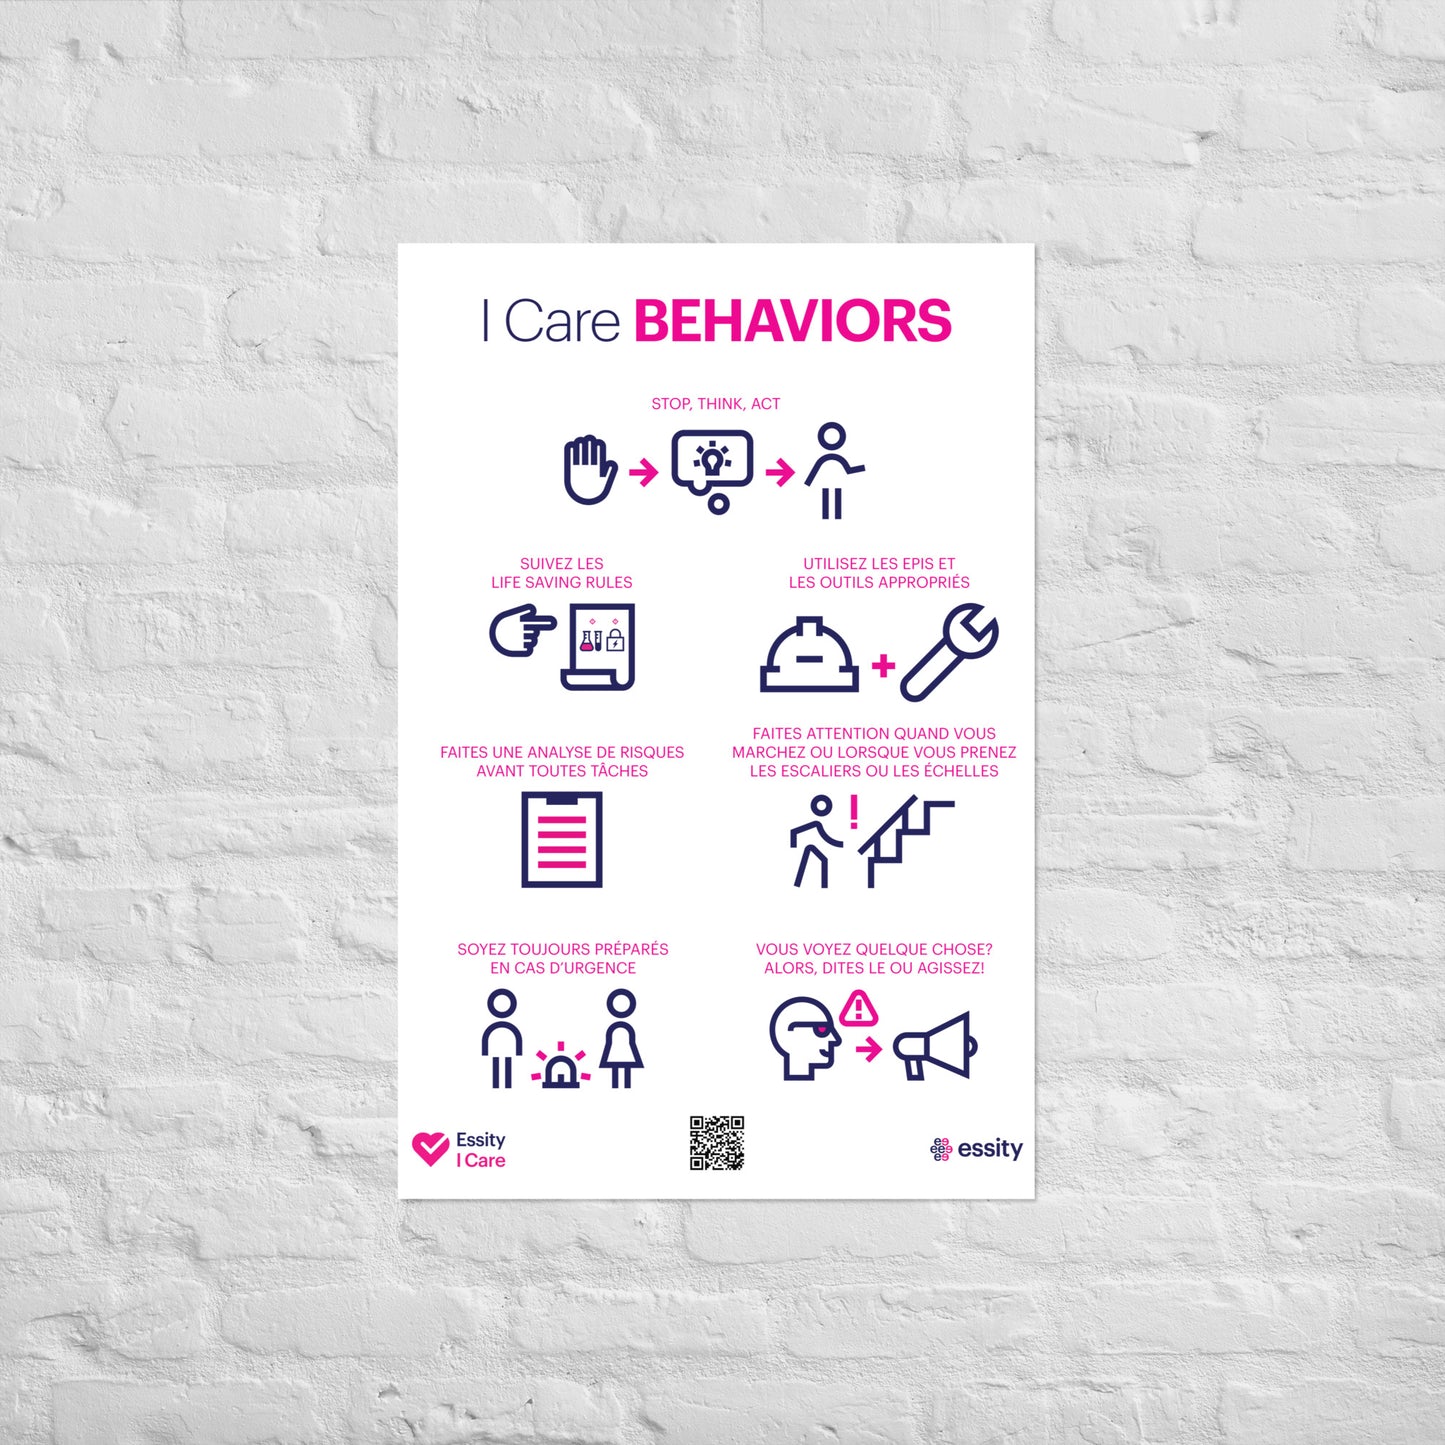 I Care Behaviors poster